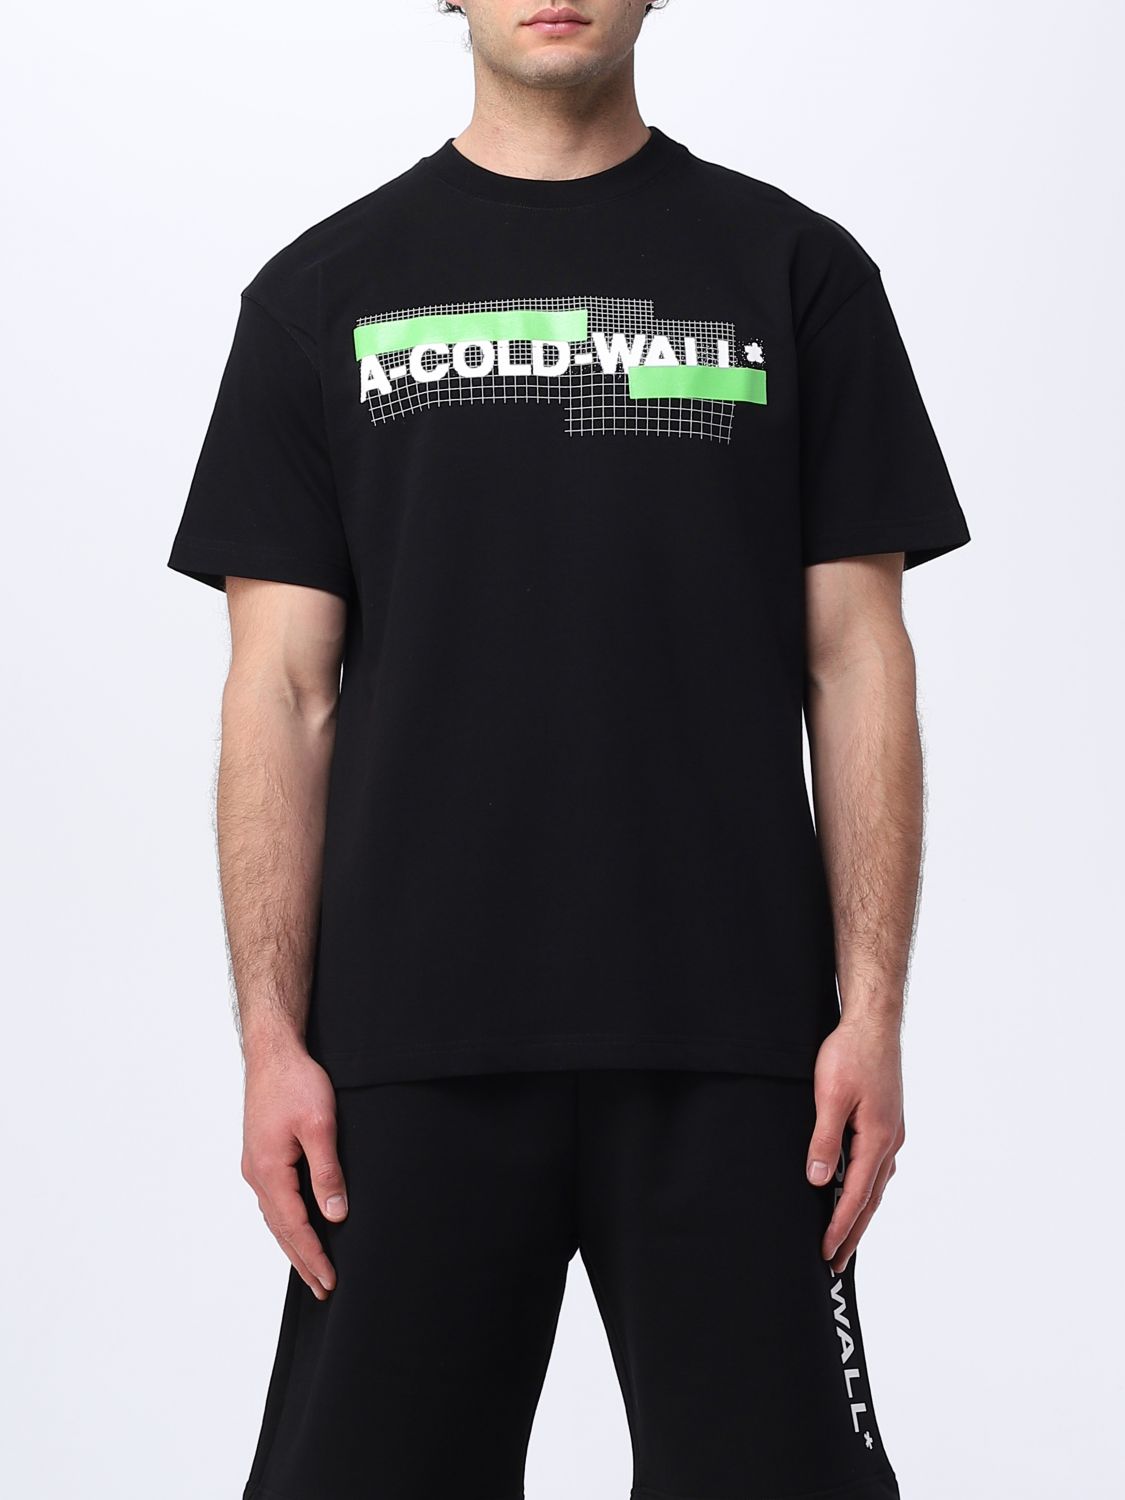 A-COLD-WALL*: t-shirt for man - Black | A-Cold-Wall* t-shirt MTS106 ...